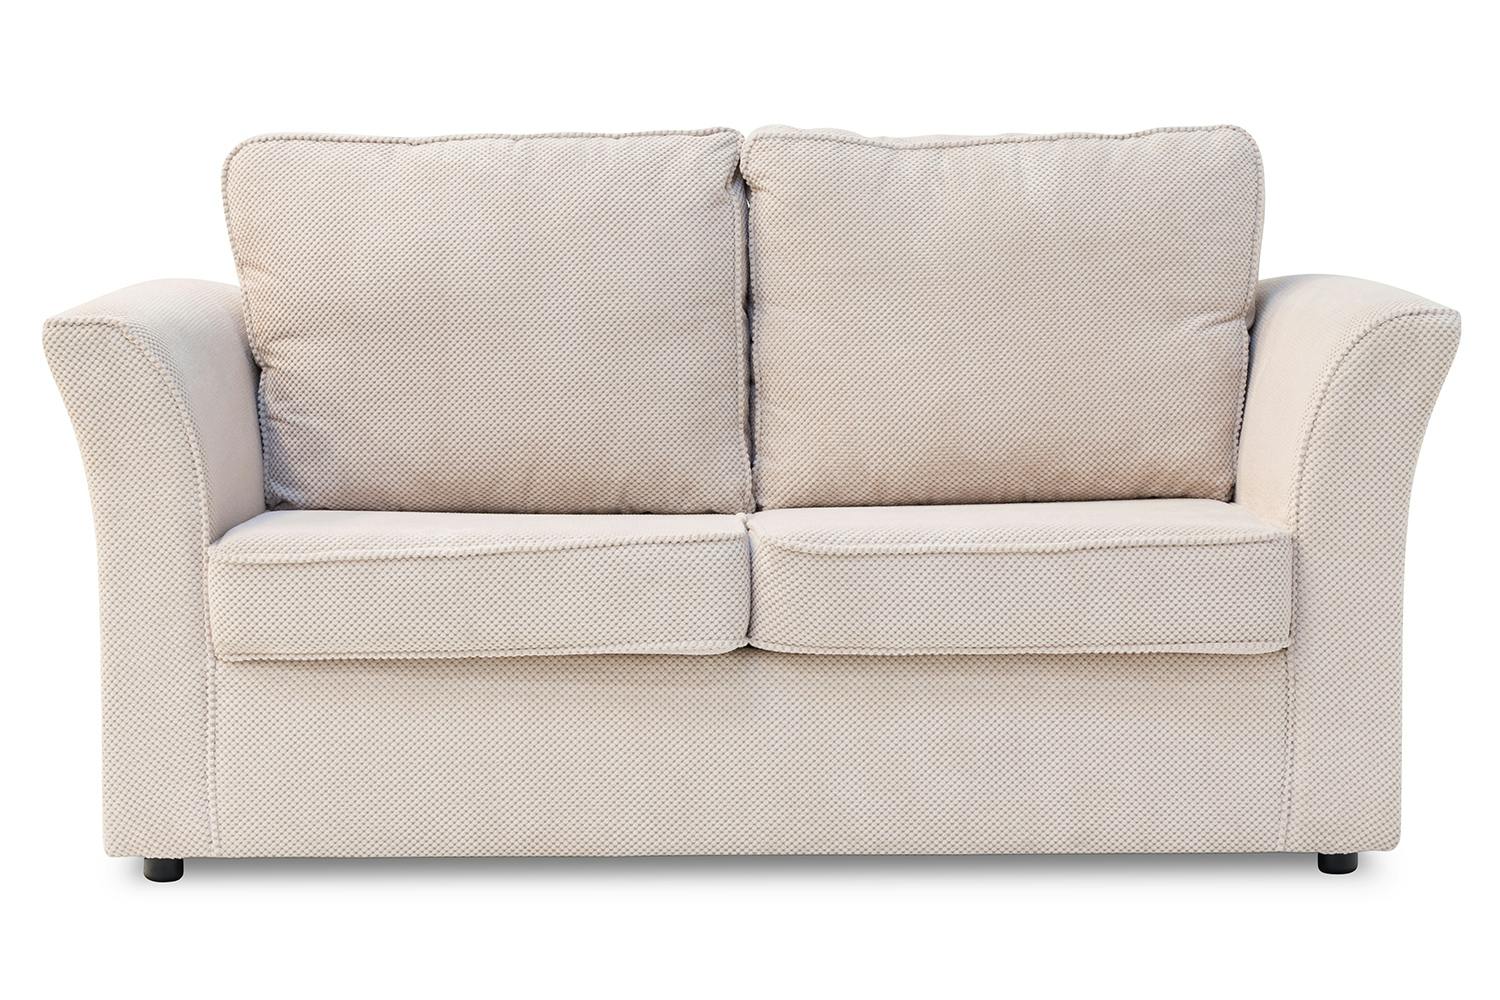 harvey norman ireland sofa beds